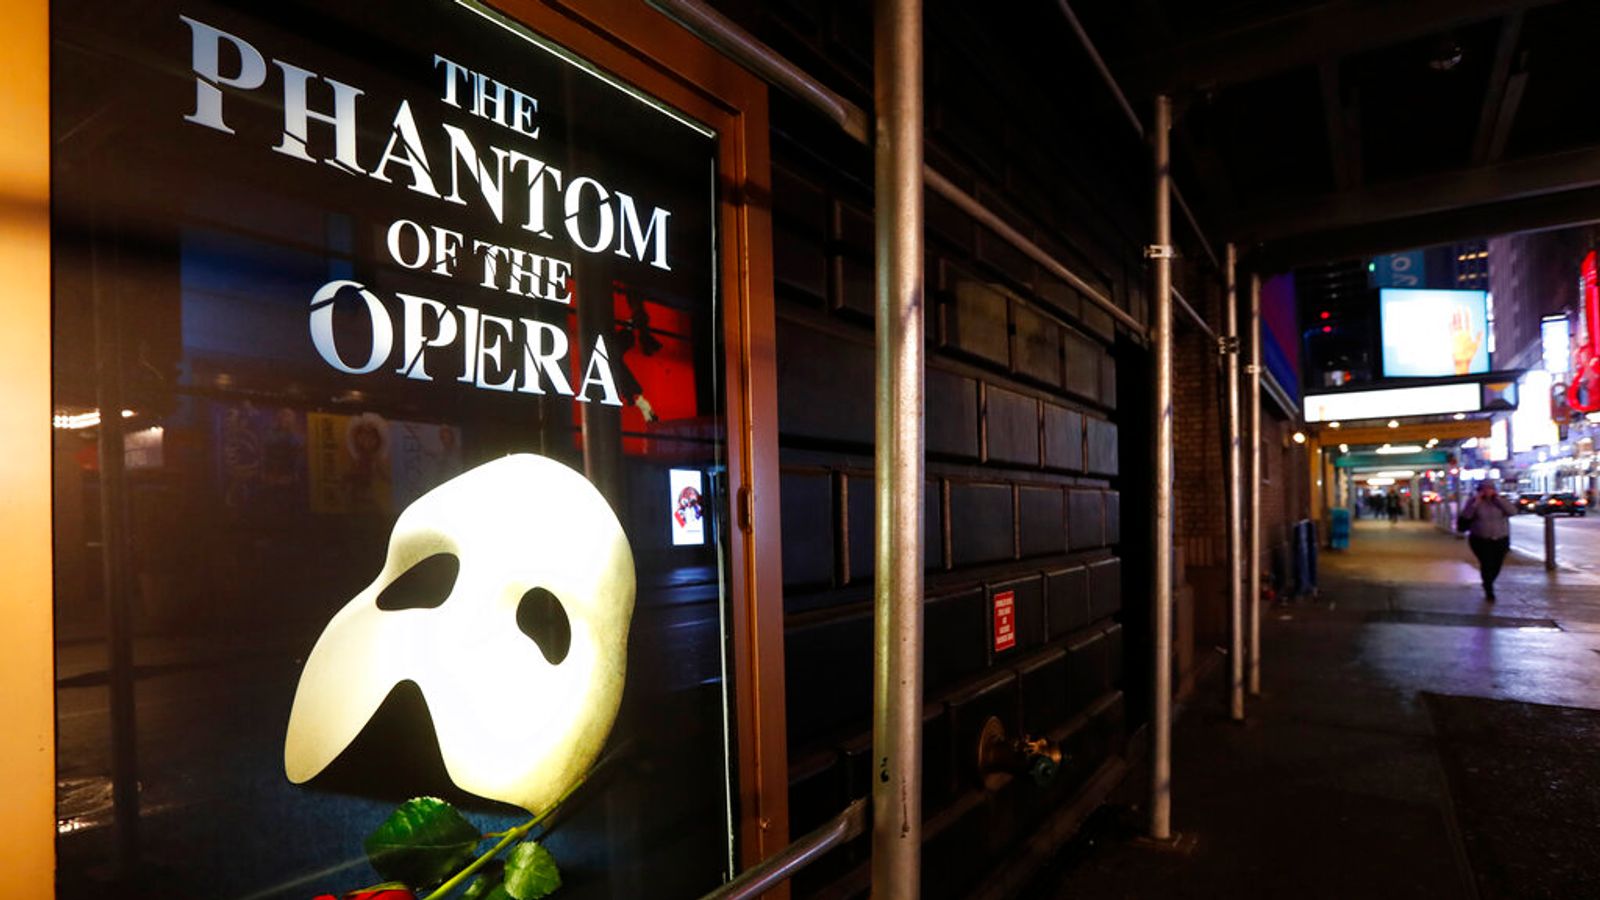 The Phantom of the Opera Broadway's longestrunning show will close